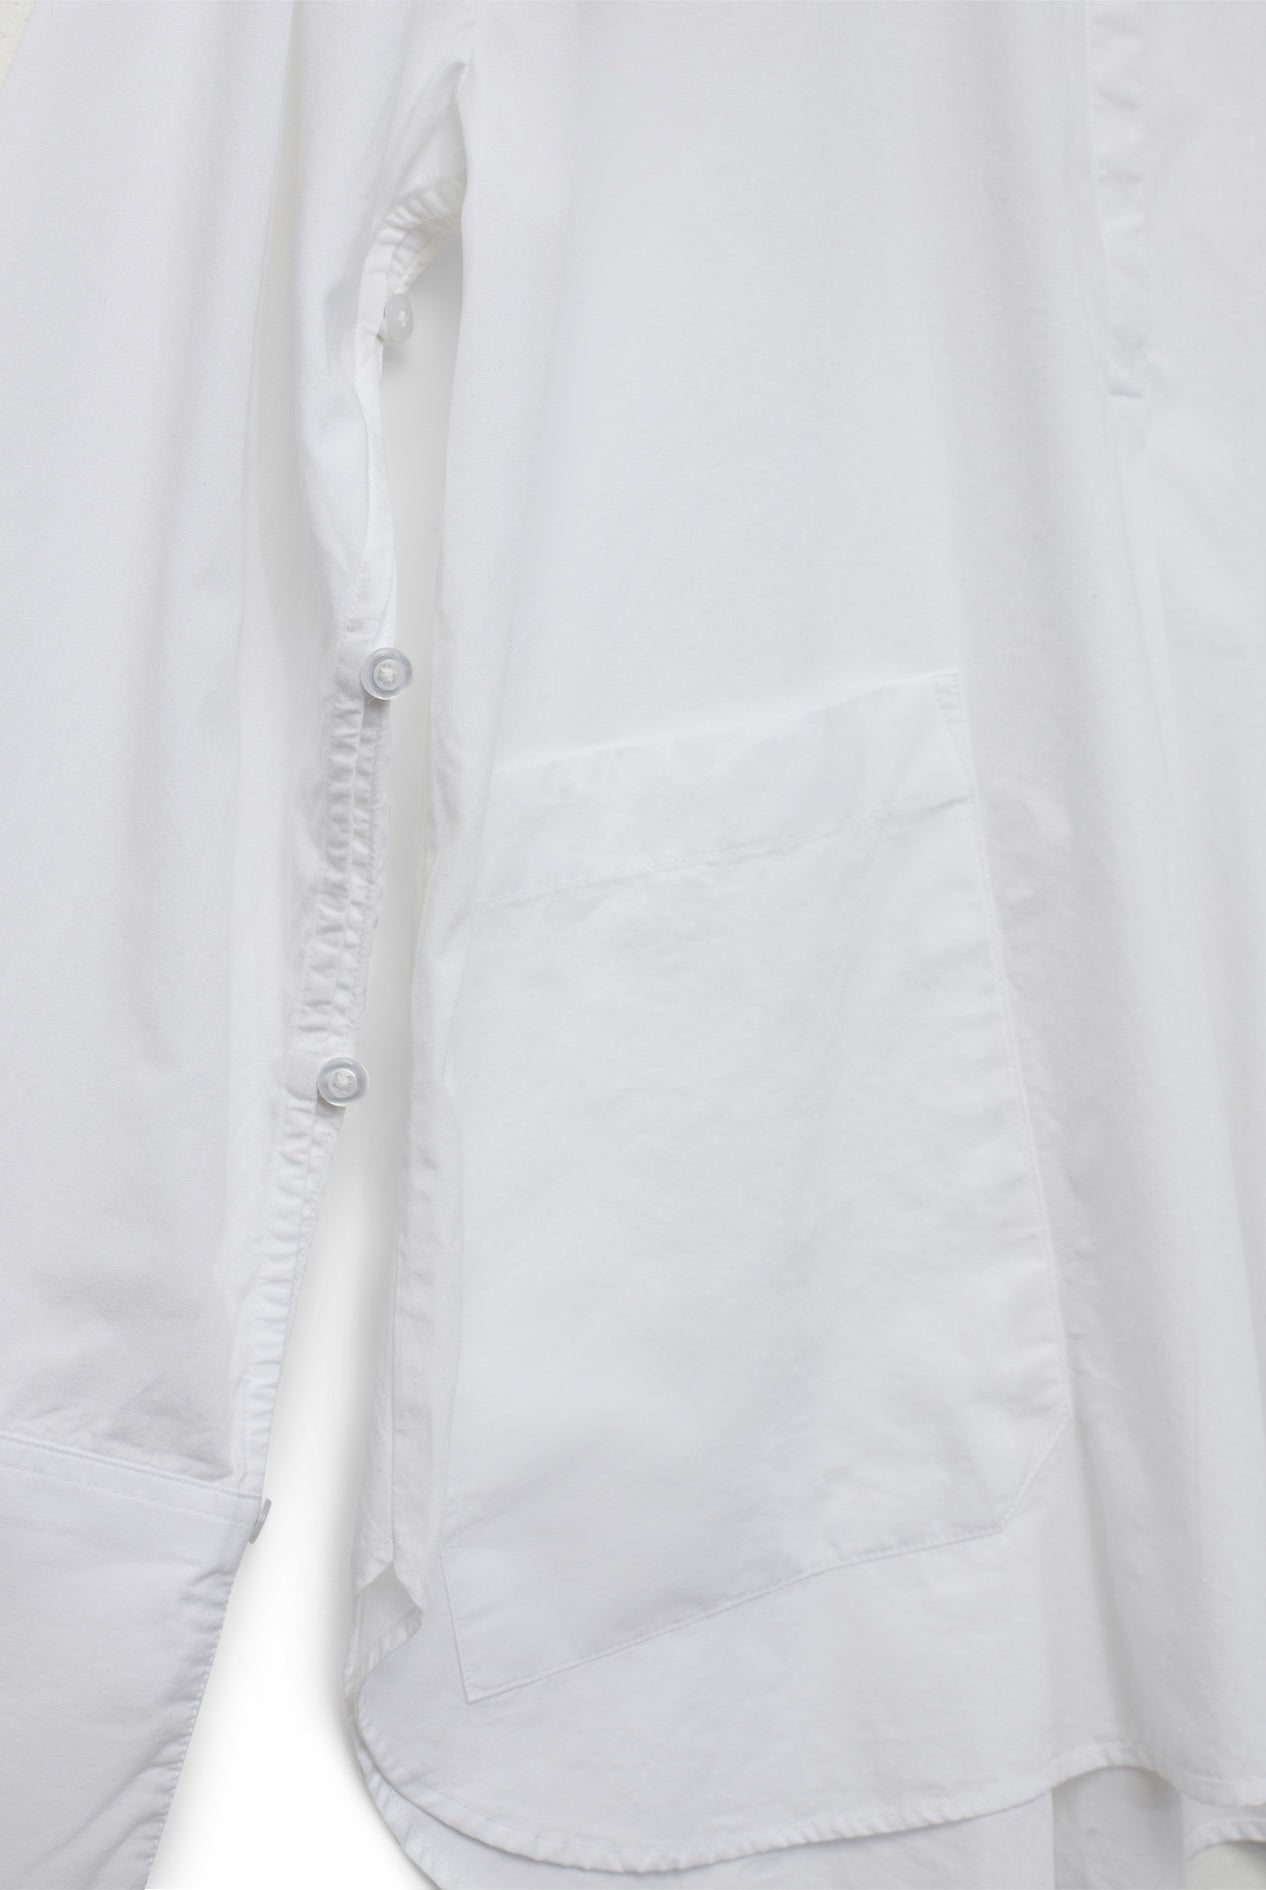 BLANCHE Copenhagen Pina-BL tunic Blouse Shirts and Blouses 10 White